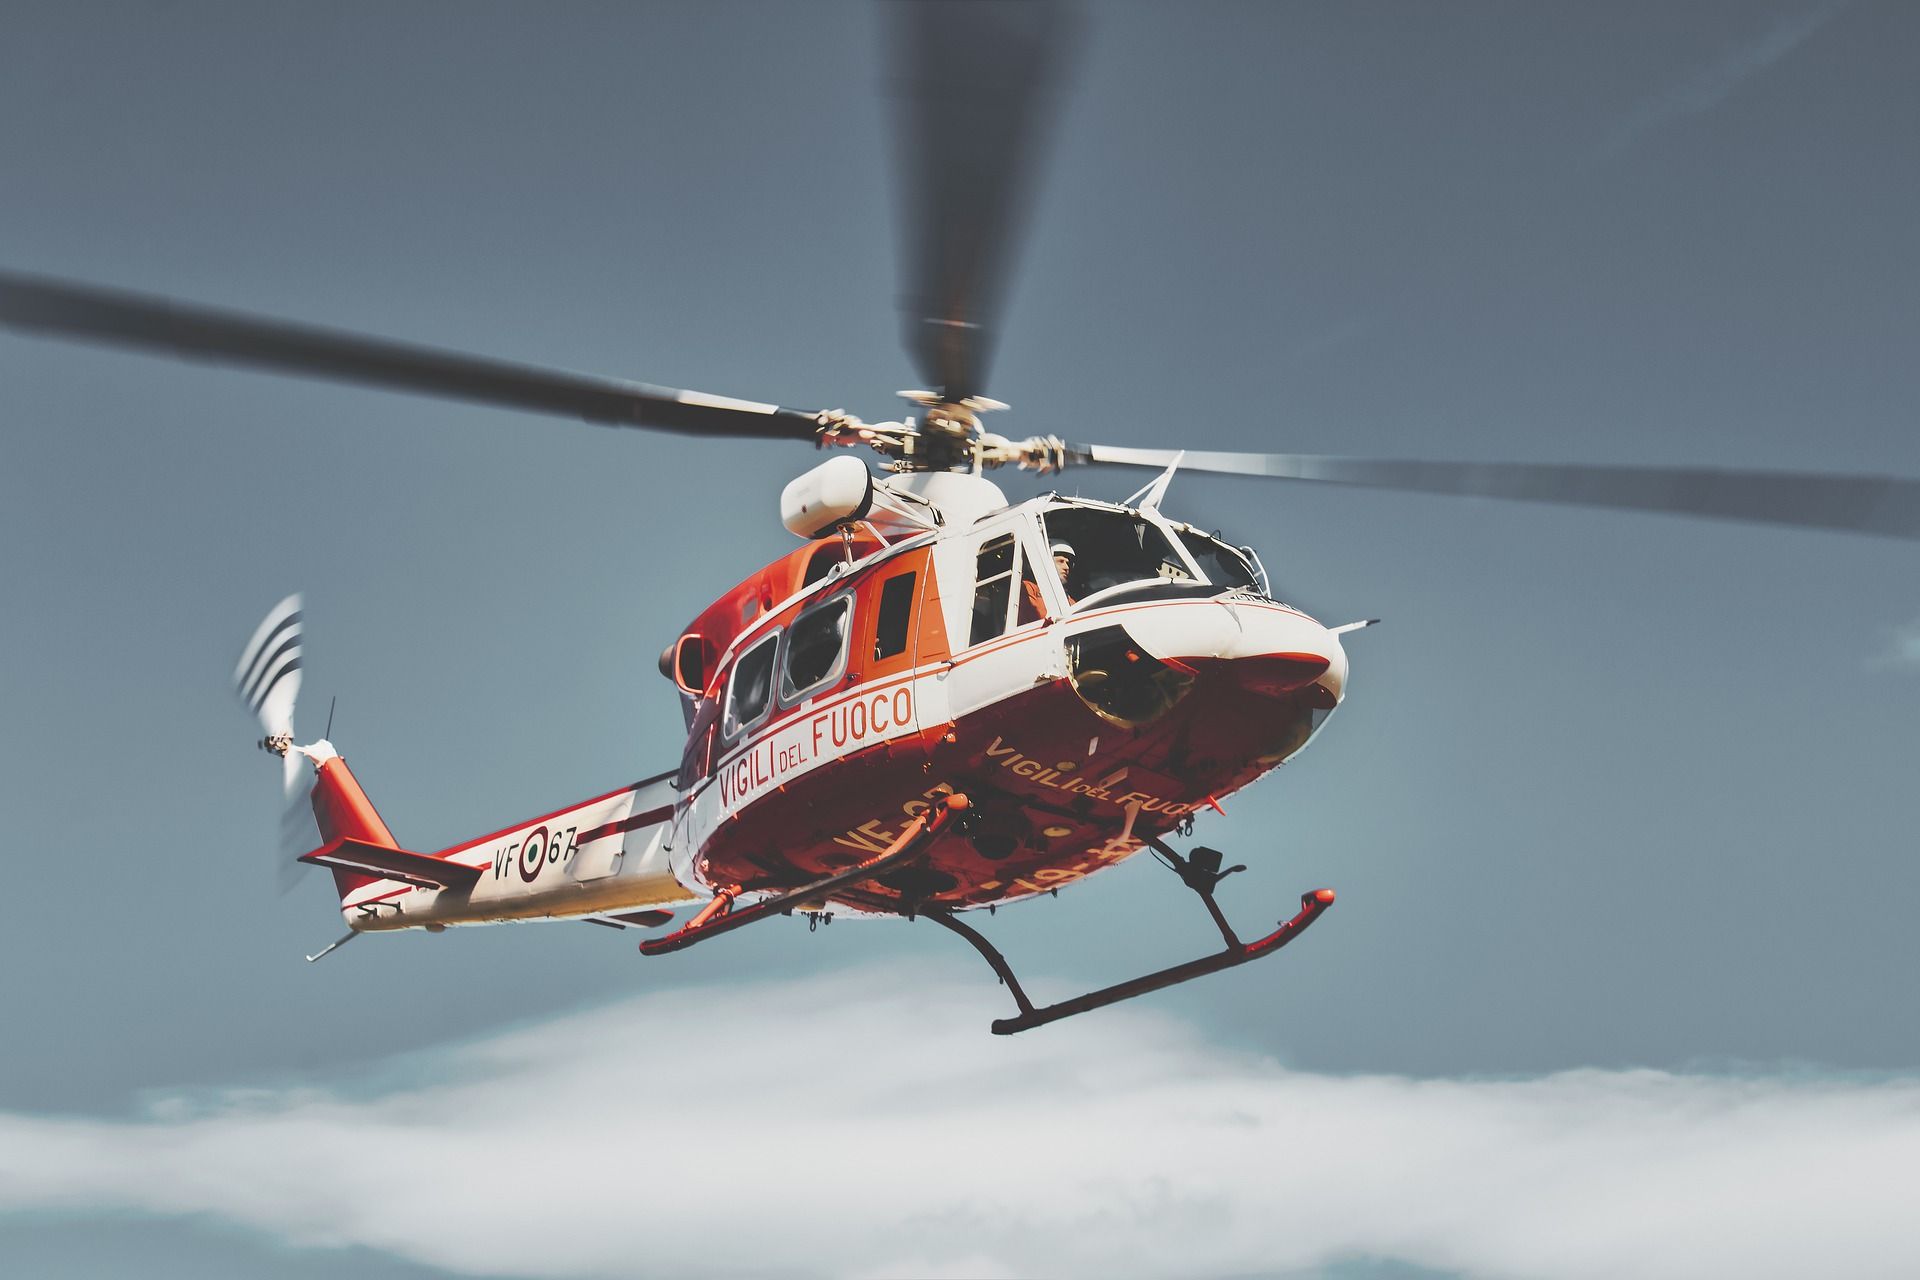 Aviation academy chopper crashes in Nalgonda, 2 pilots dead